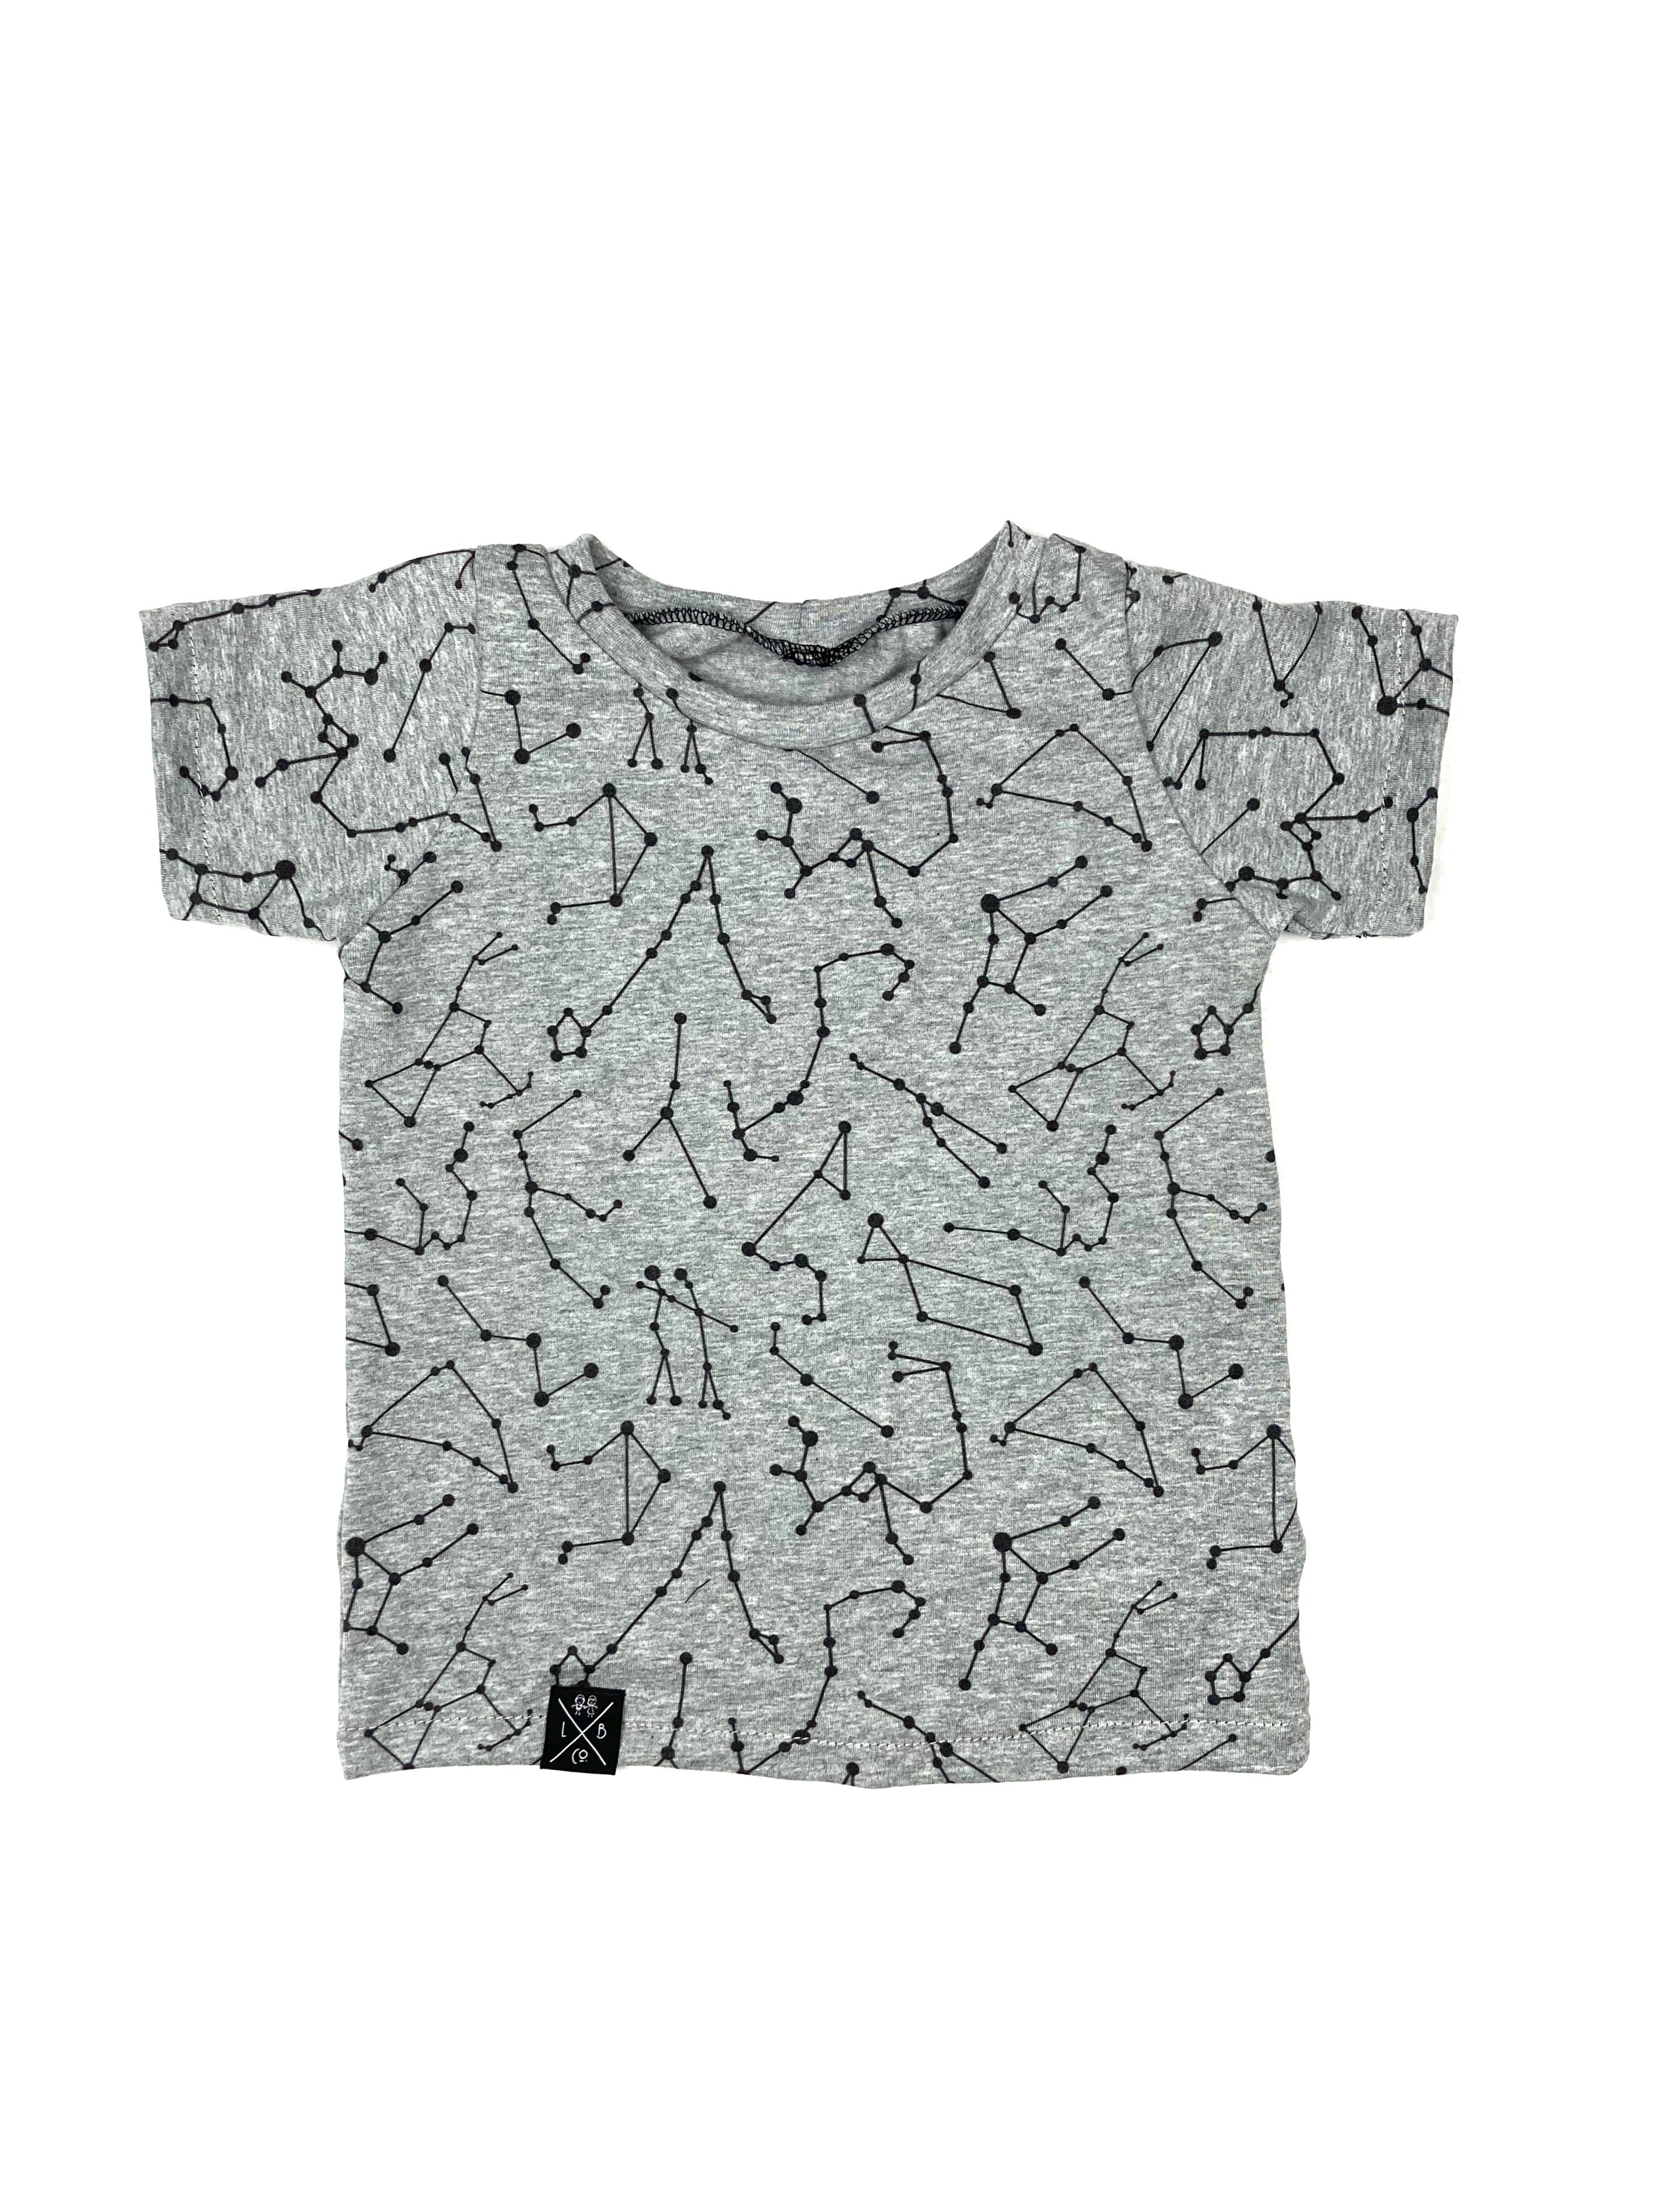 Constellation T-Shirt